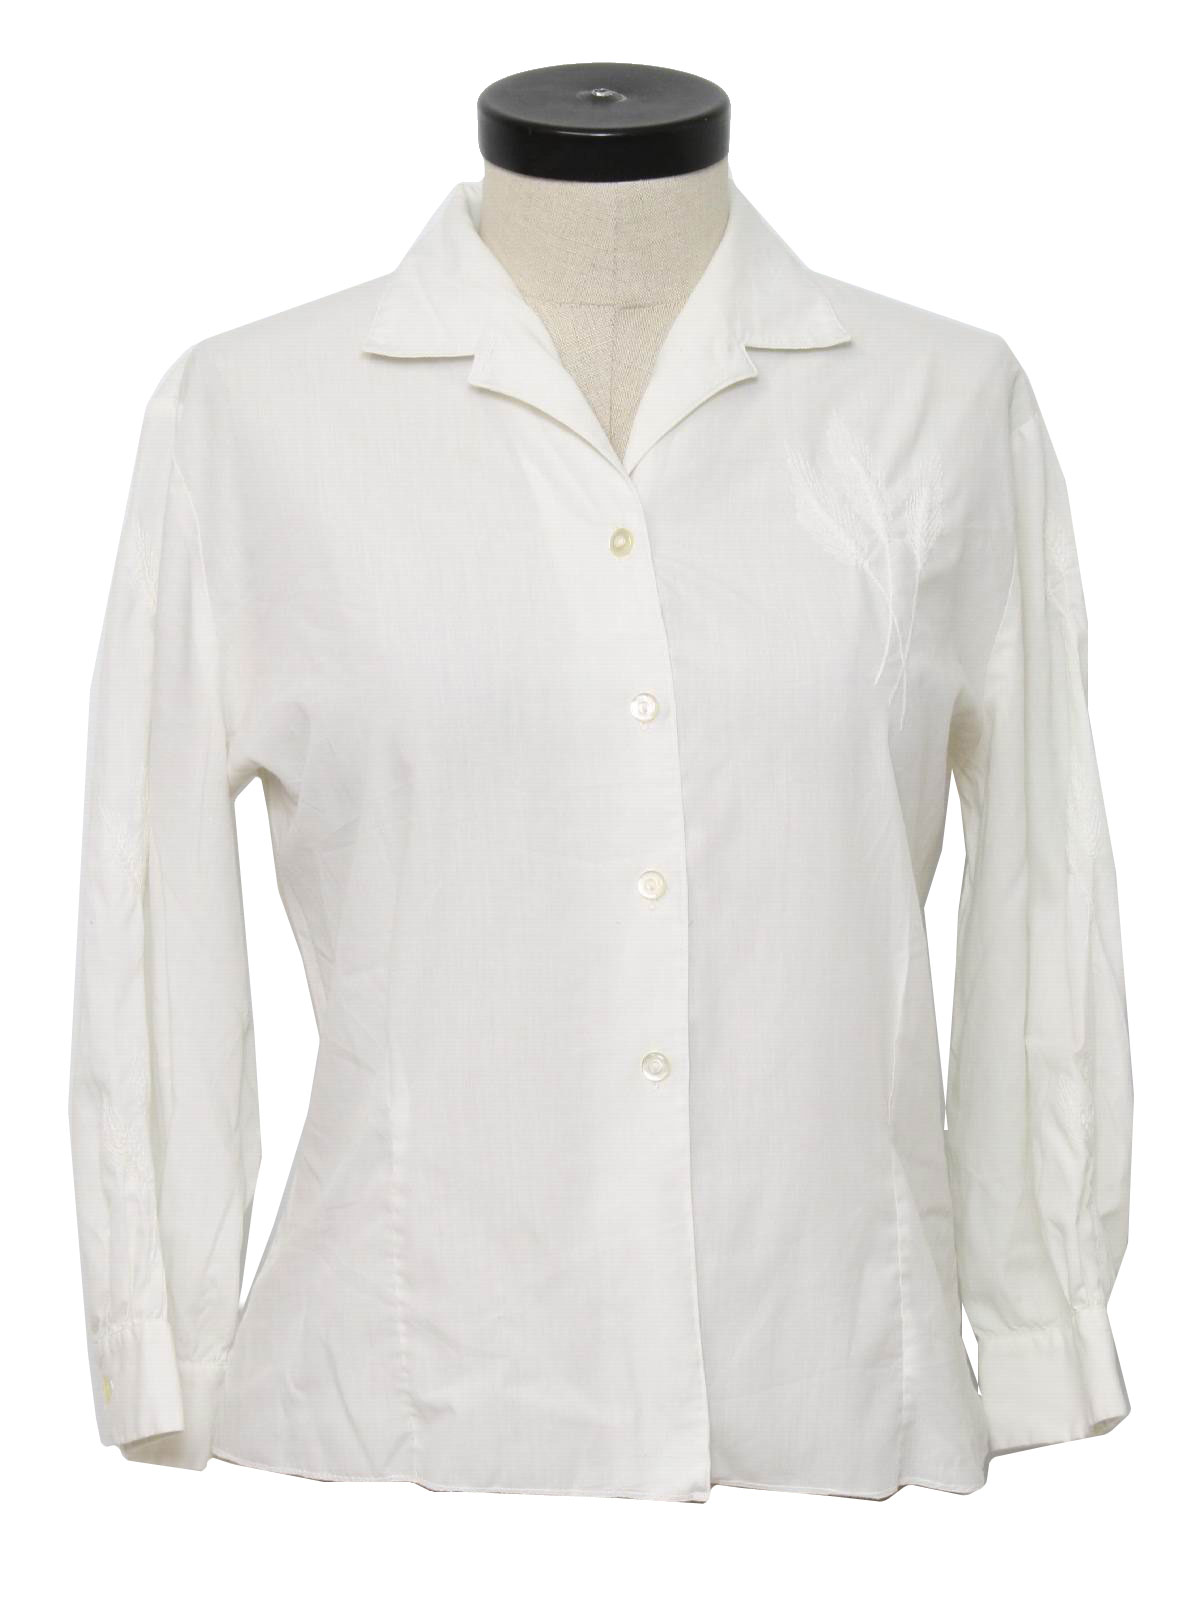 1950's Retro Shirt: late 50s -Ship n Shore- Womens white dacron ...